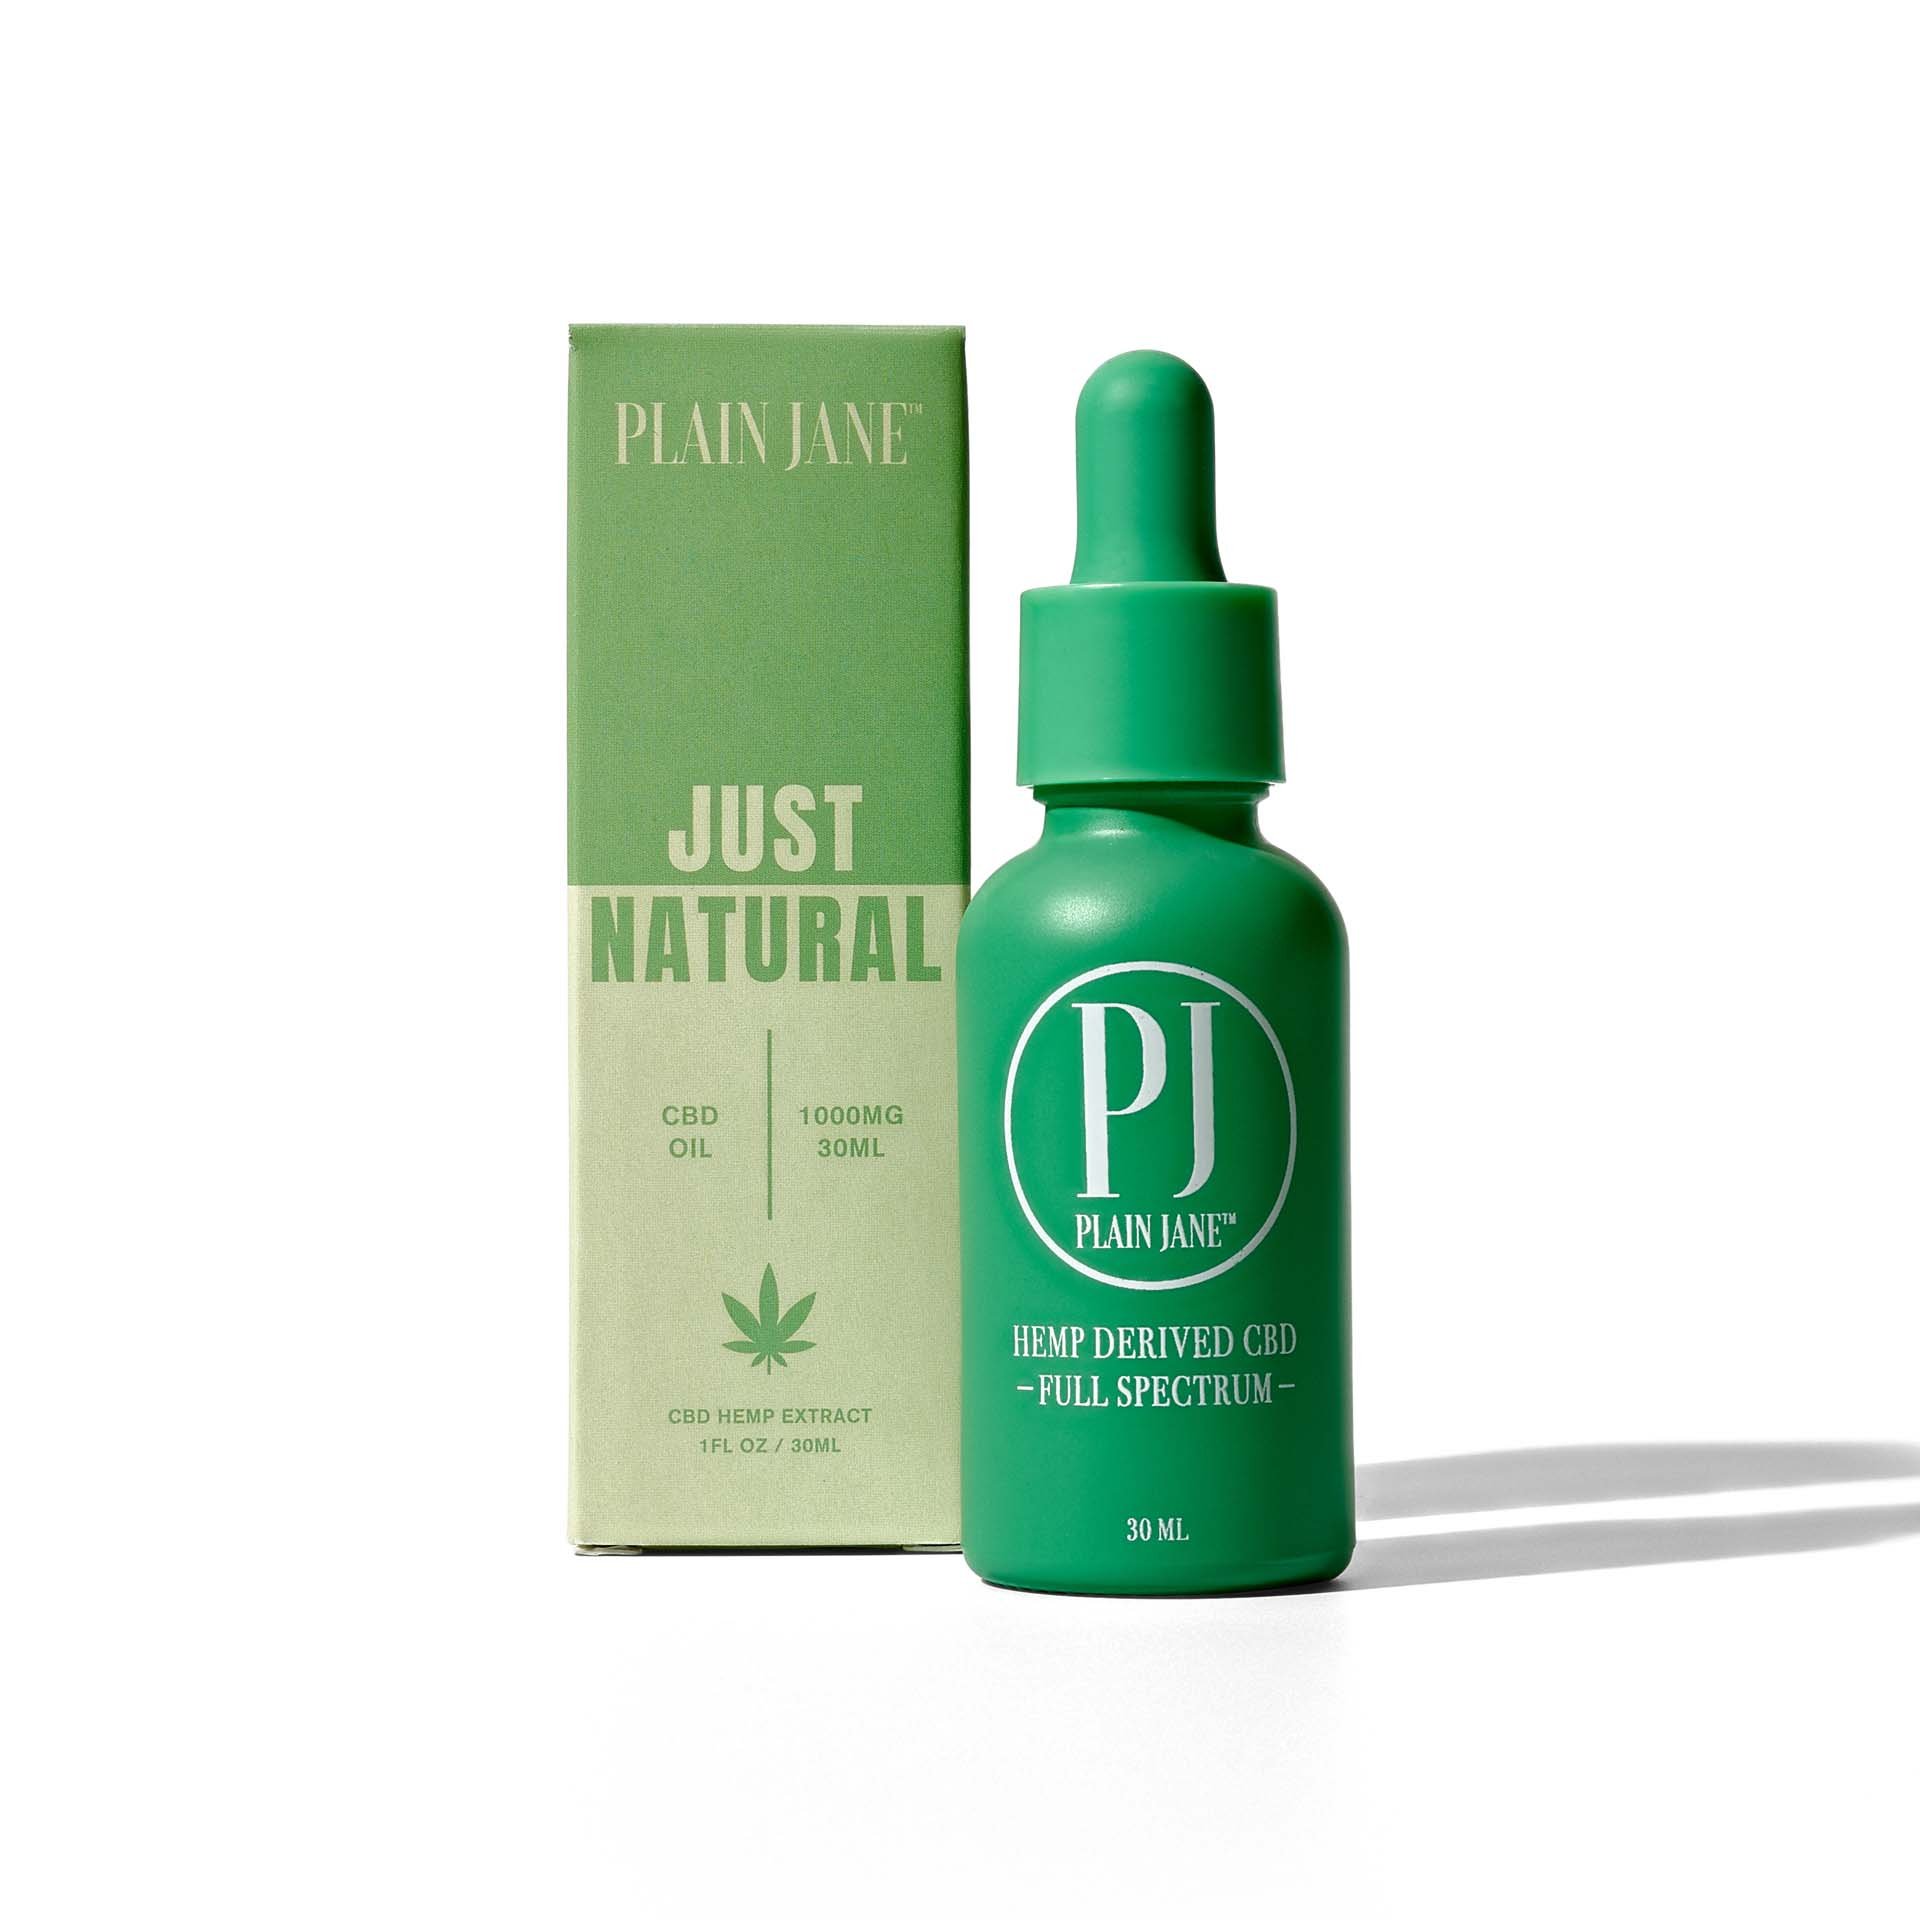 Plain Jane - Just Natural CBD oil, photograph with green tincture bottle.jpg